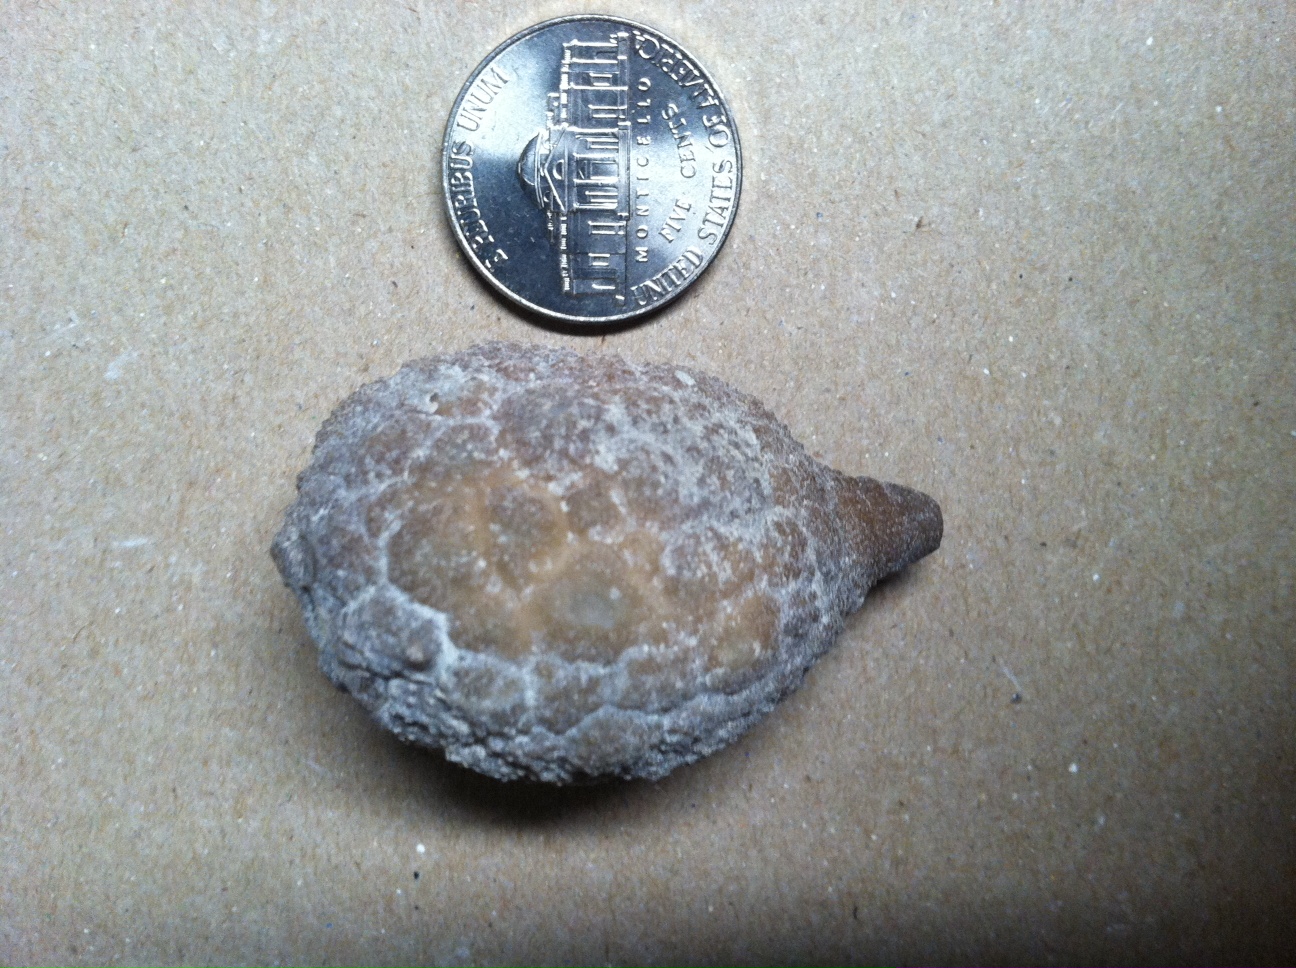 Holocystites specimen as found on the shale spoil piles.